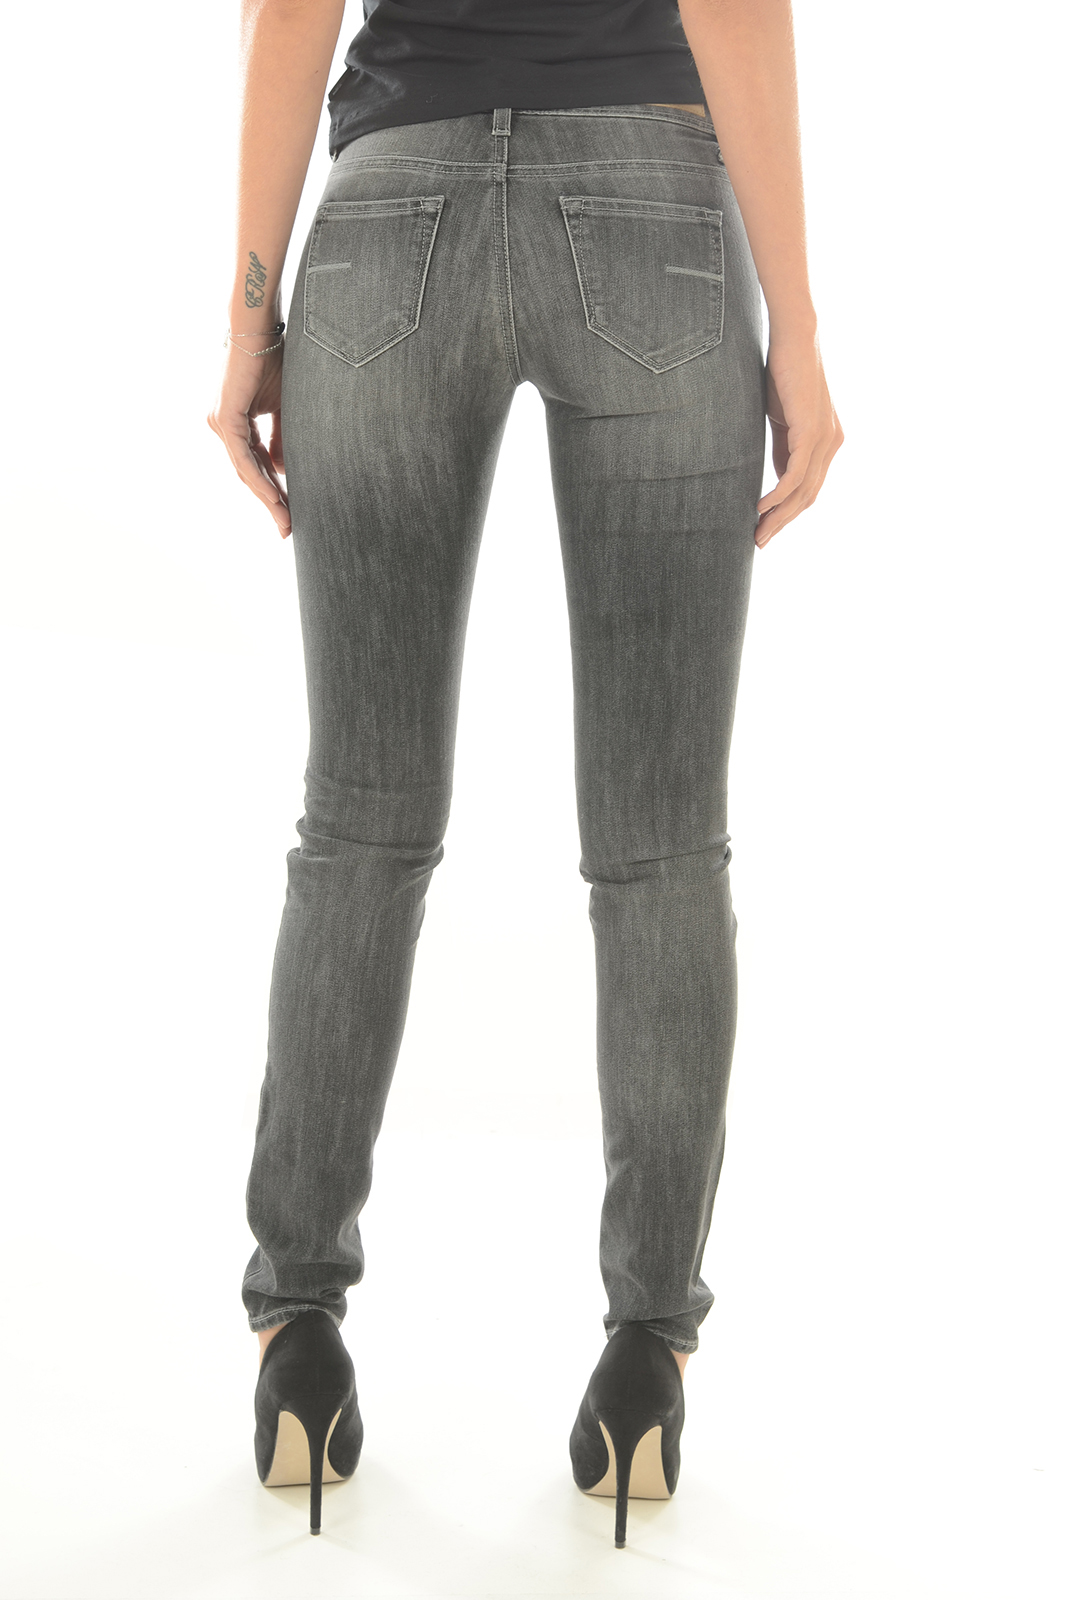 Meltin'pot Jeans Gris Skinny Stretch Marceline W D1515